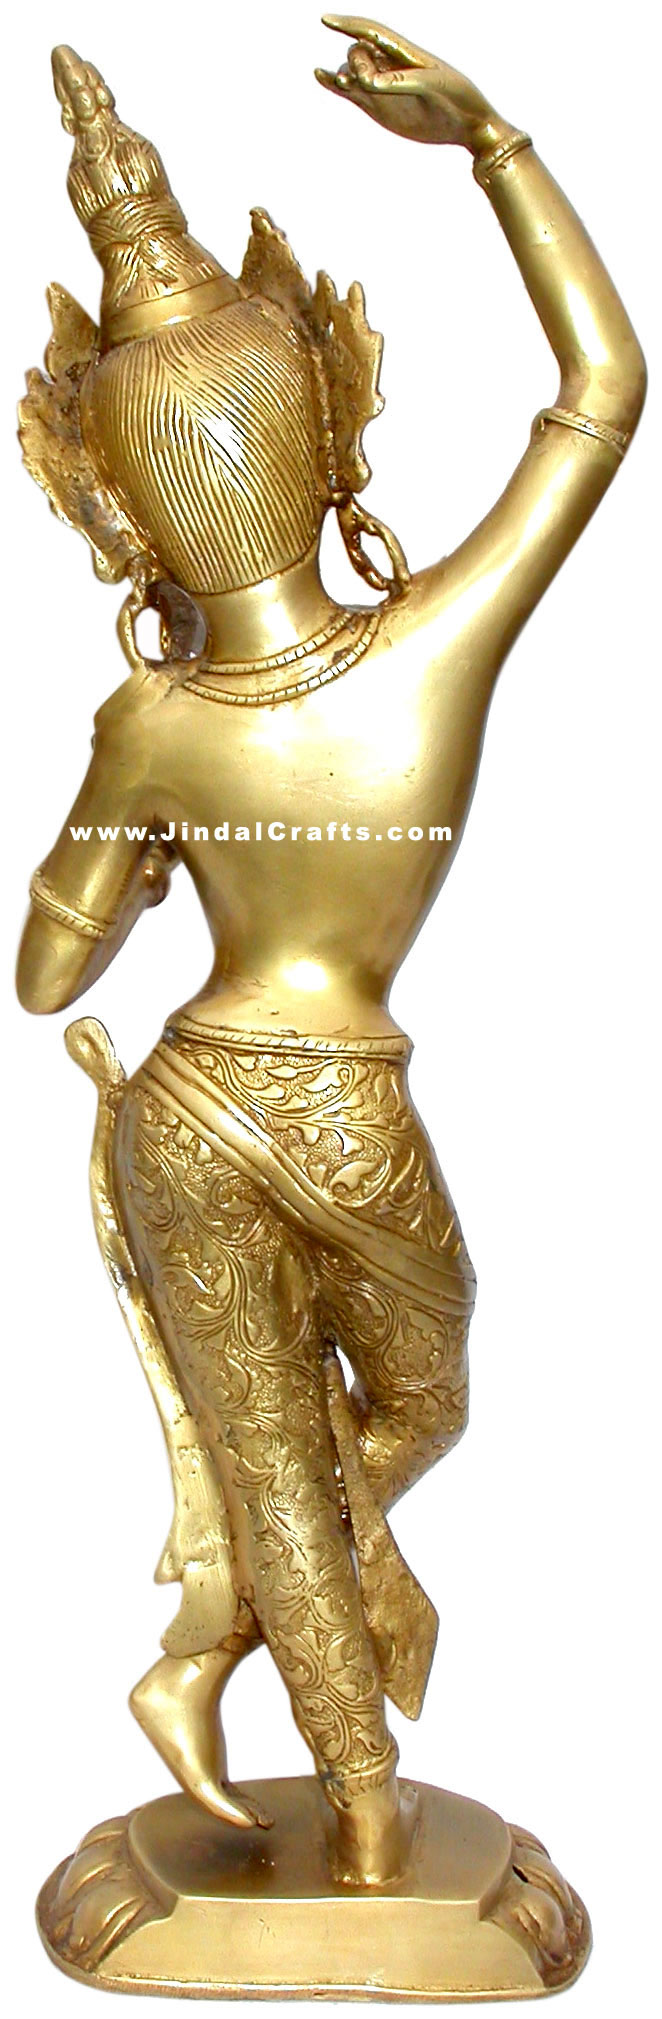 Tara Buddhist Goddess Sculpture Statue Idol Antique Art